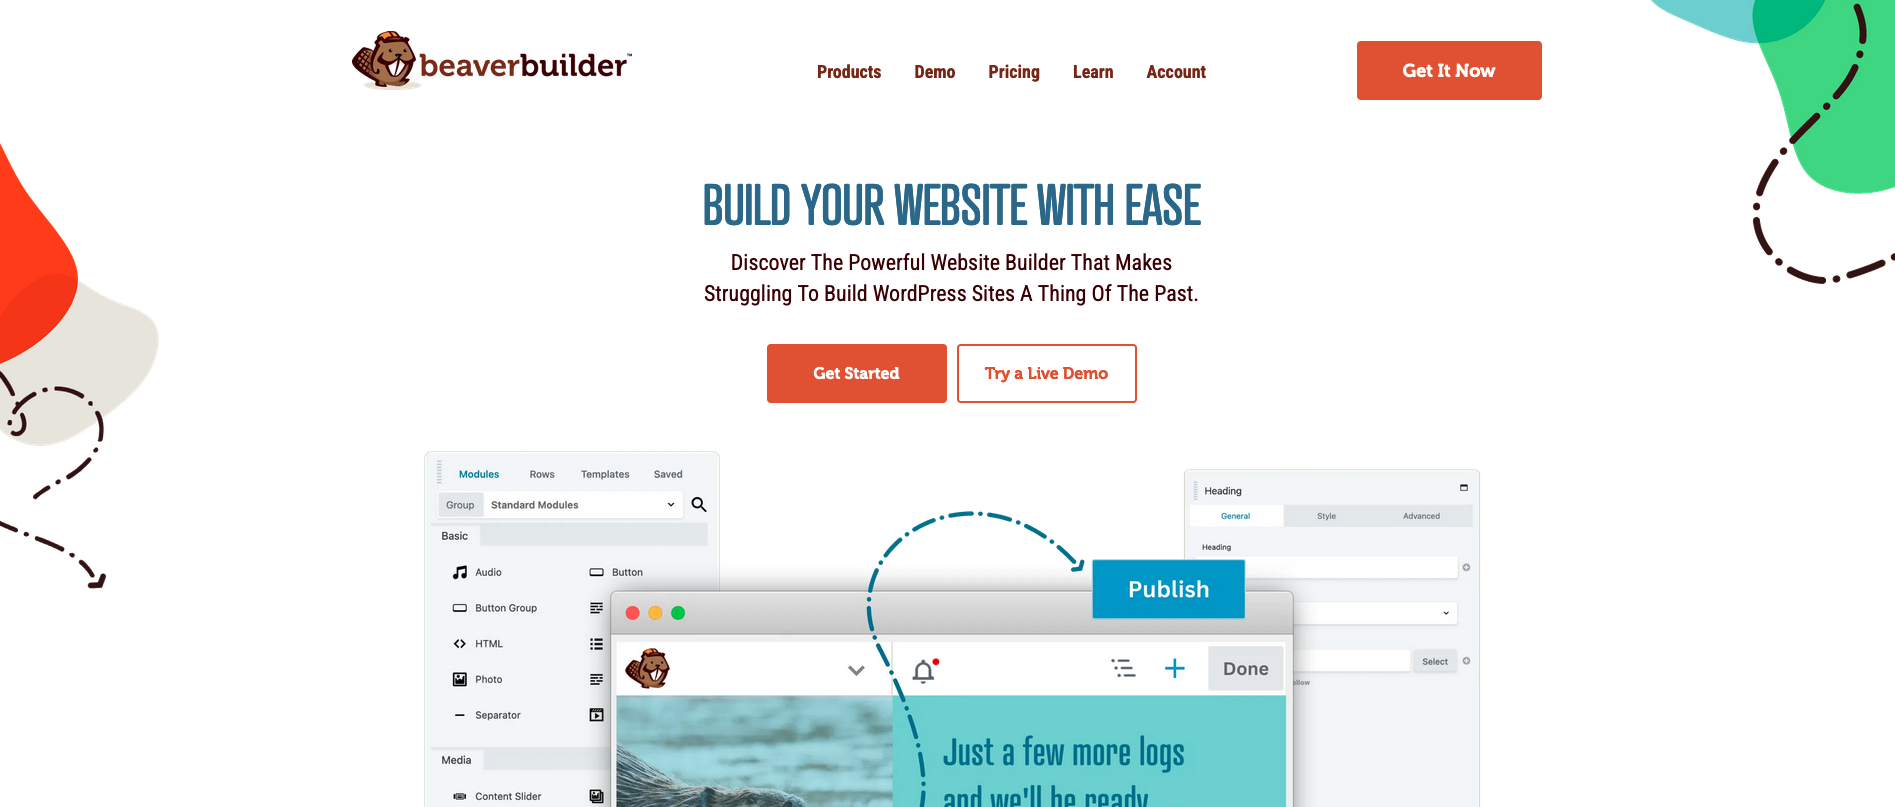 Beaver Builder homepage screenshot